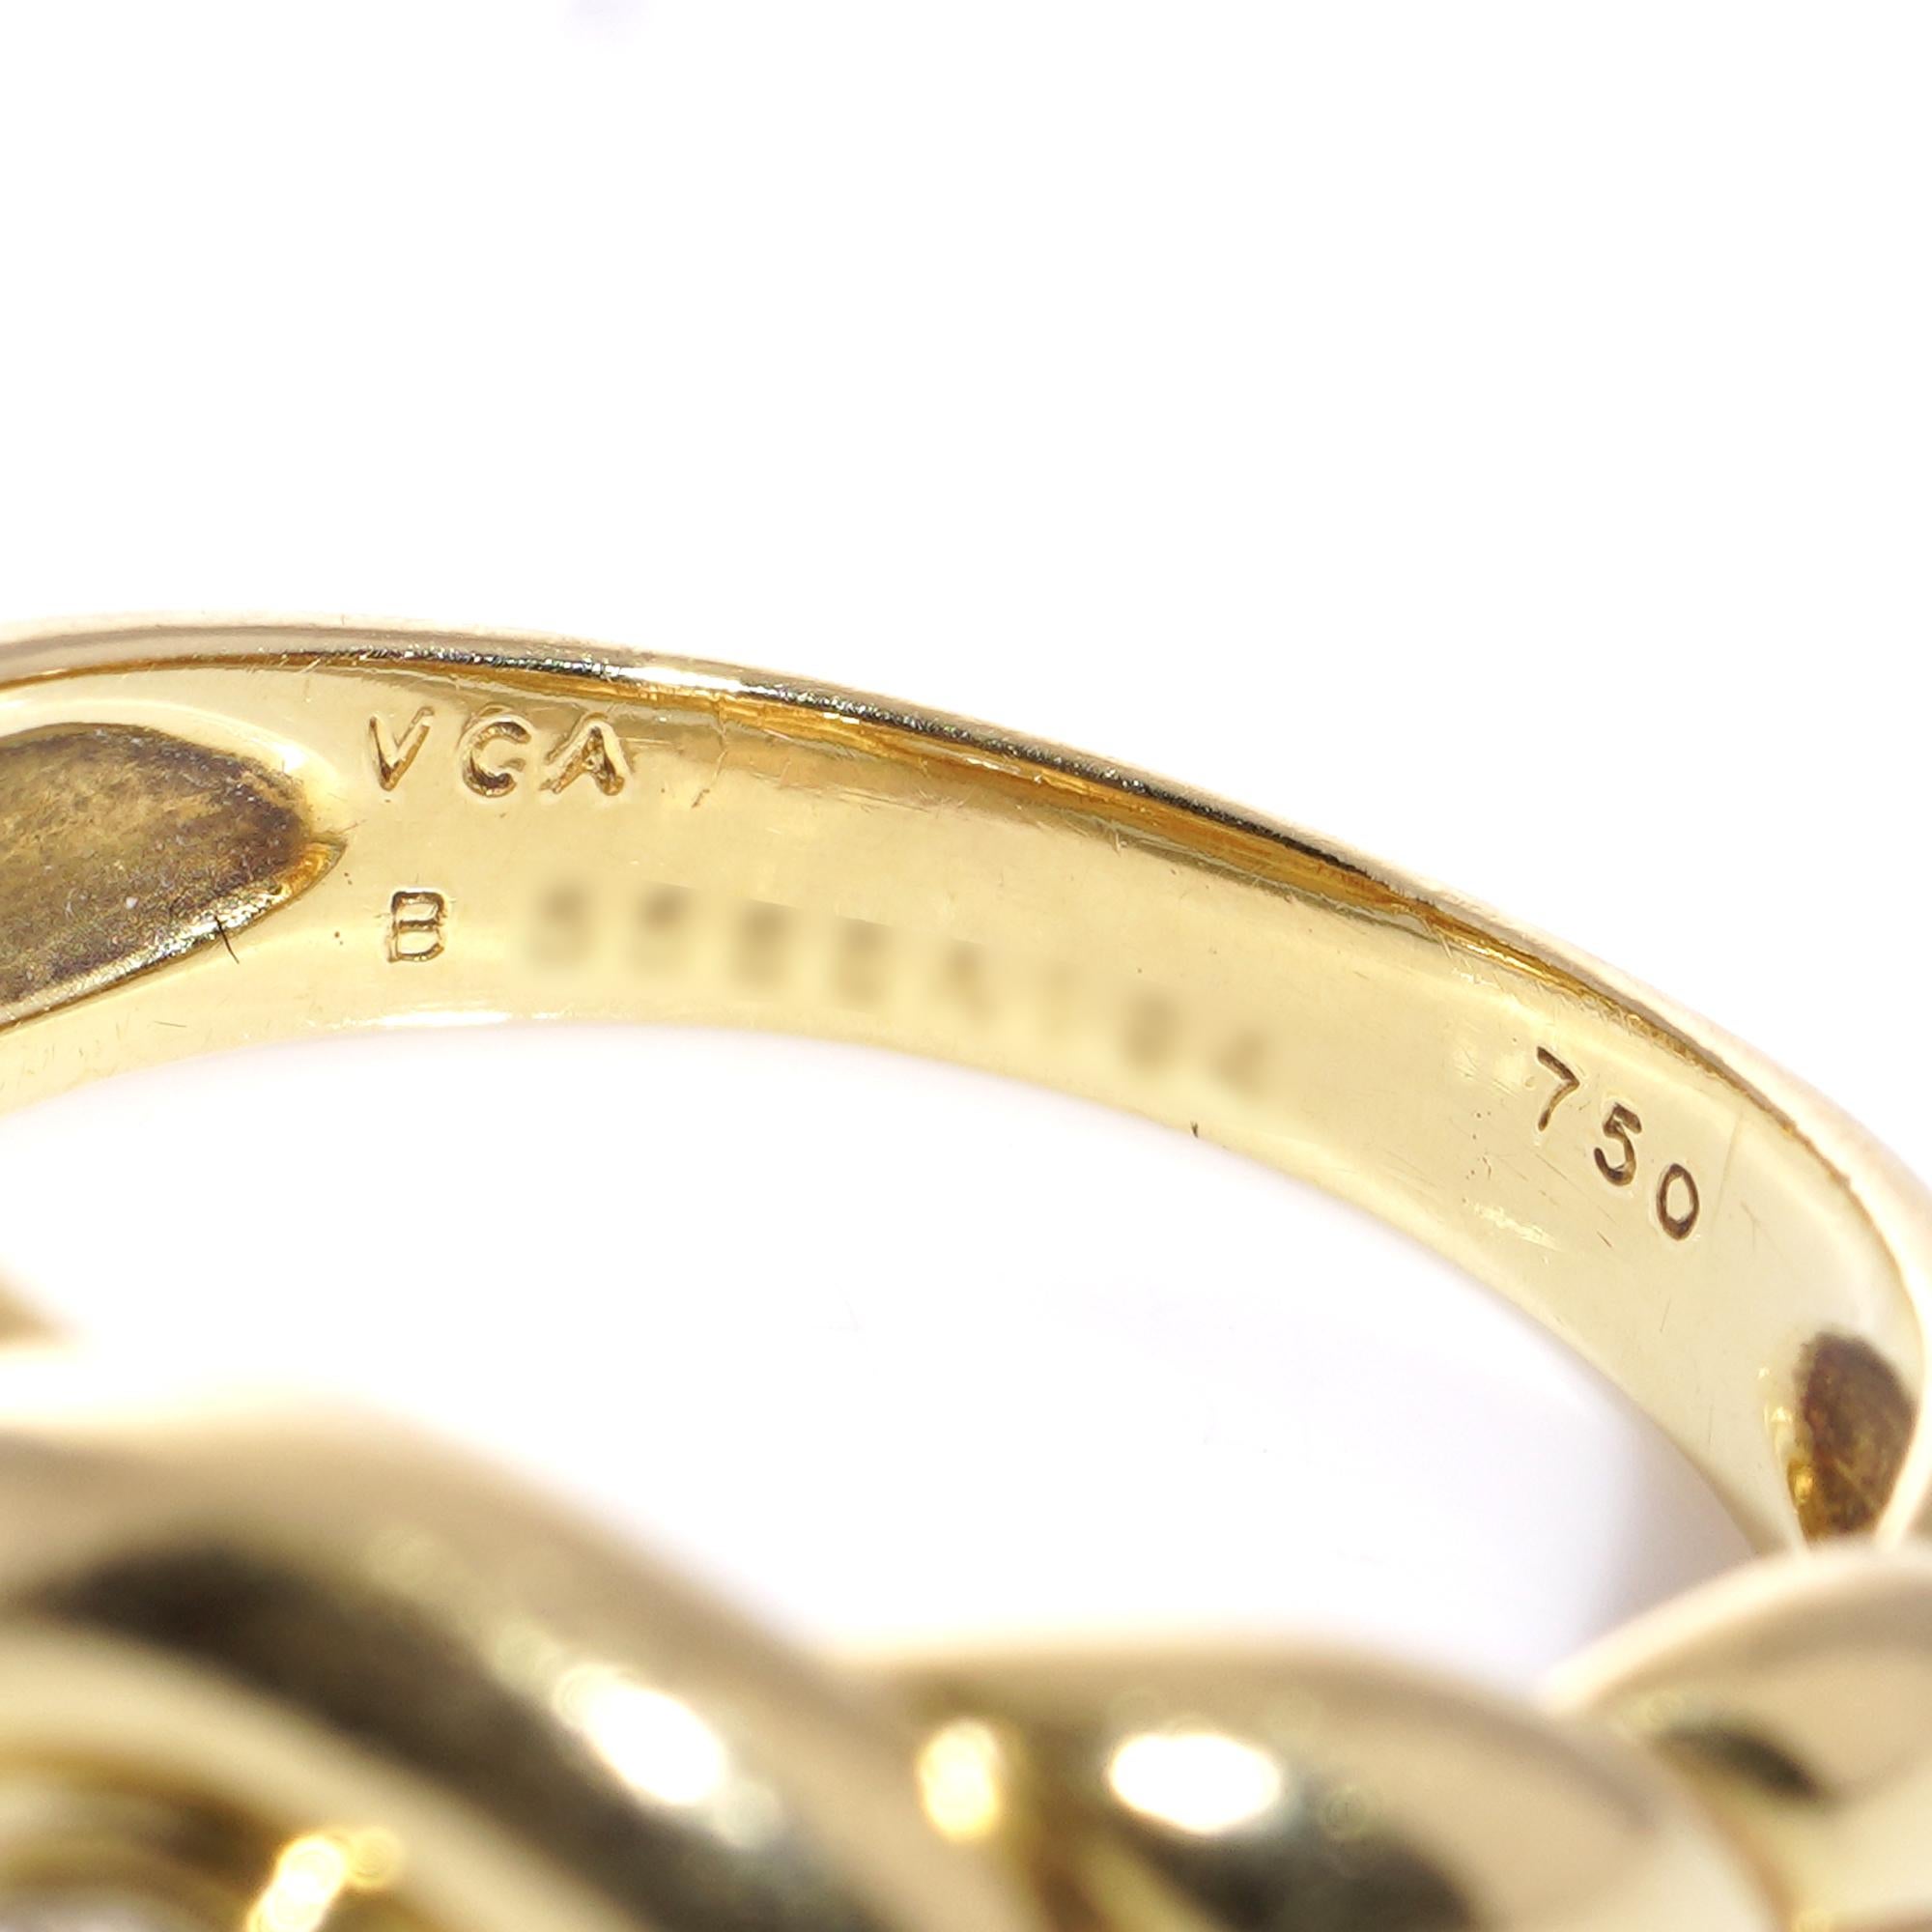 Van Cleef & Arpels 18kt. yellow gold braid design ring For Sale 1